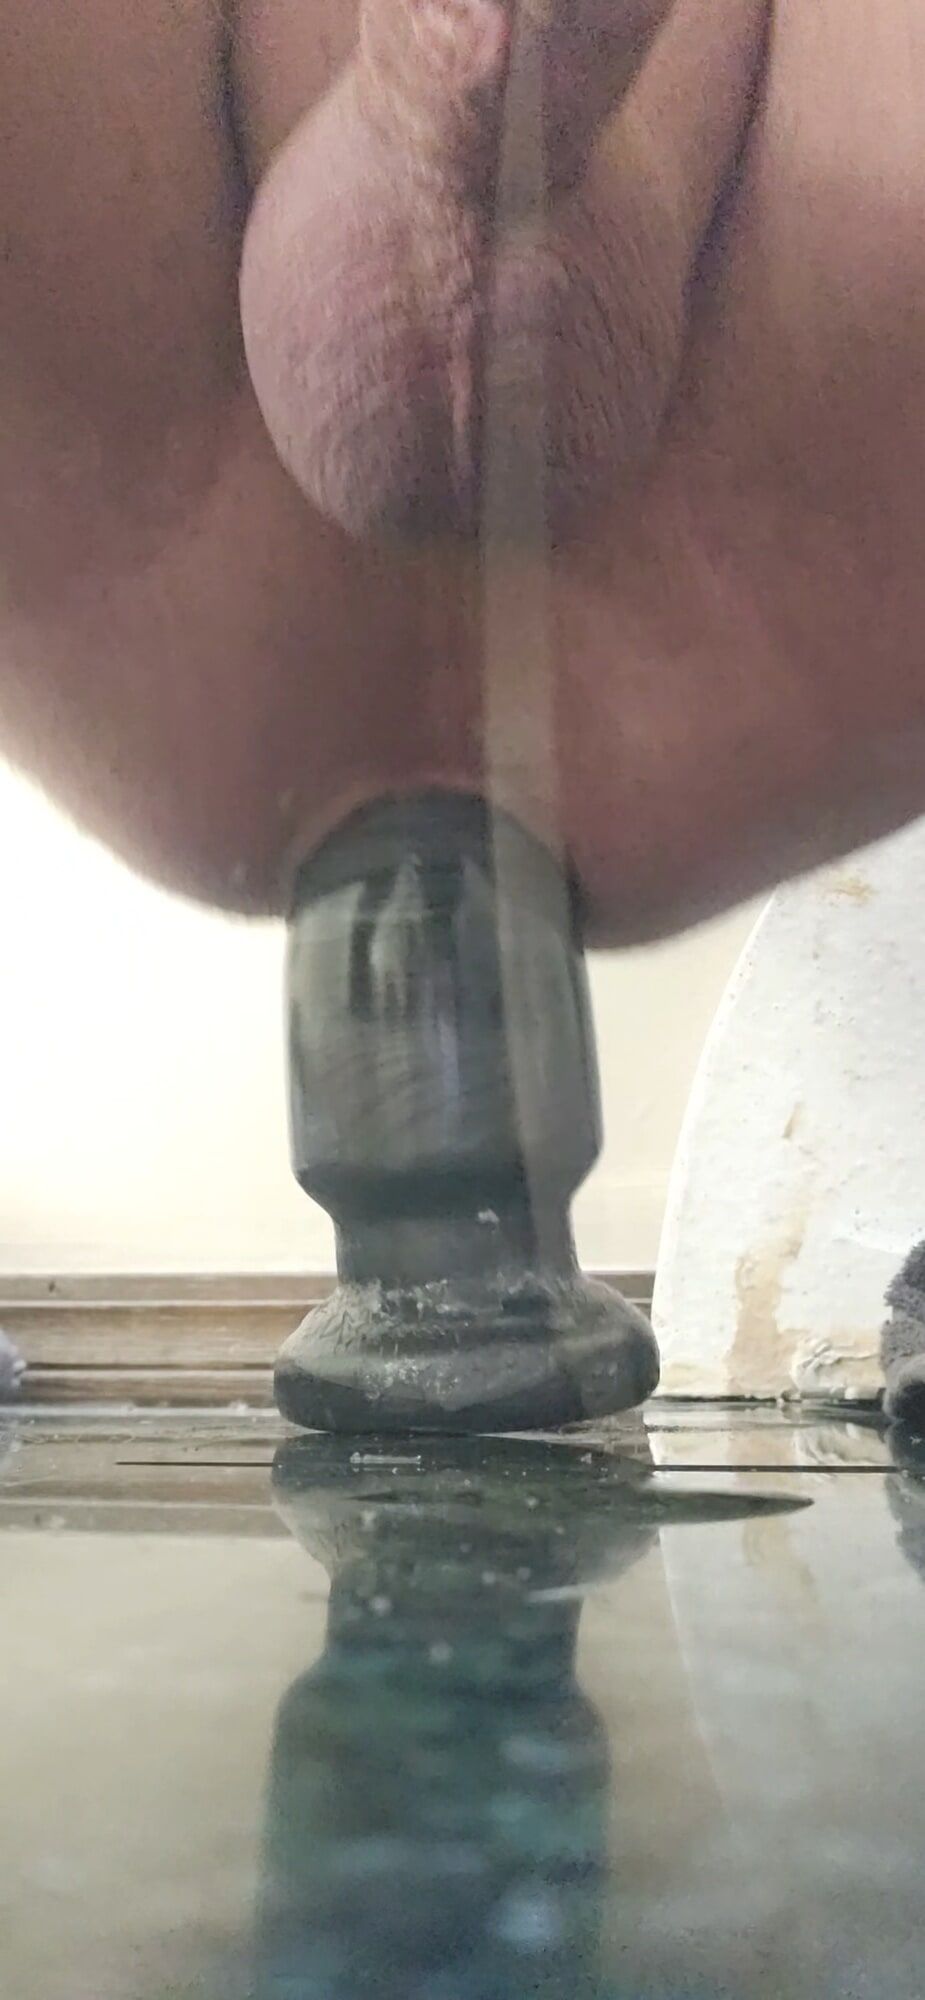 Presume dripping cock huge anal plug #20